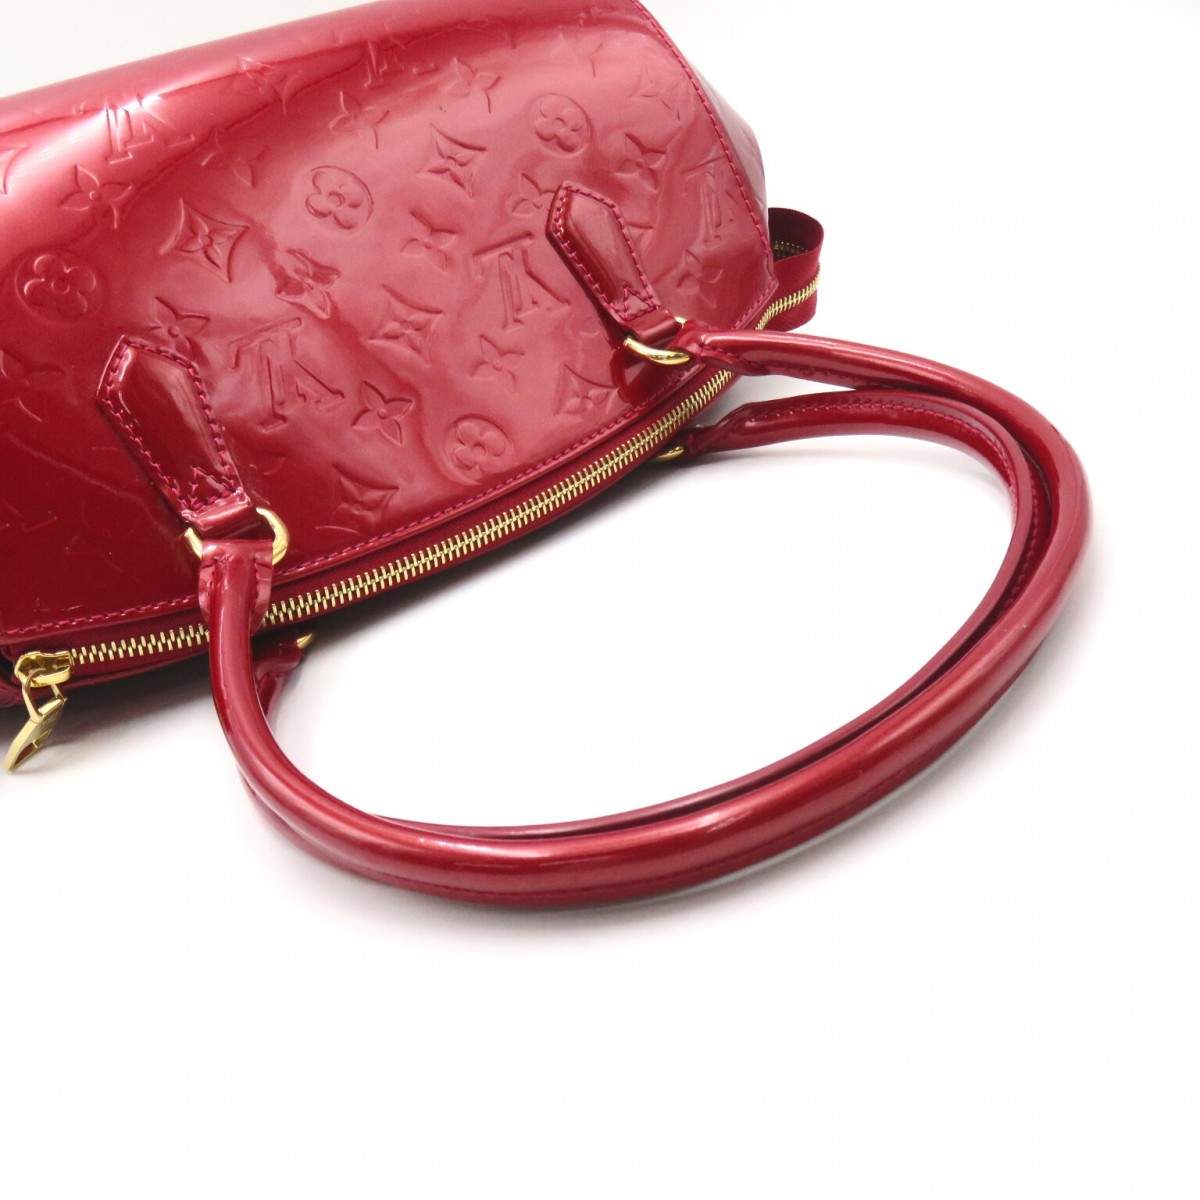 Sherwood Louis Vuitton Handbags Red Patent Leather Joli, 47% OFF